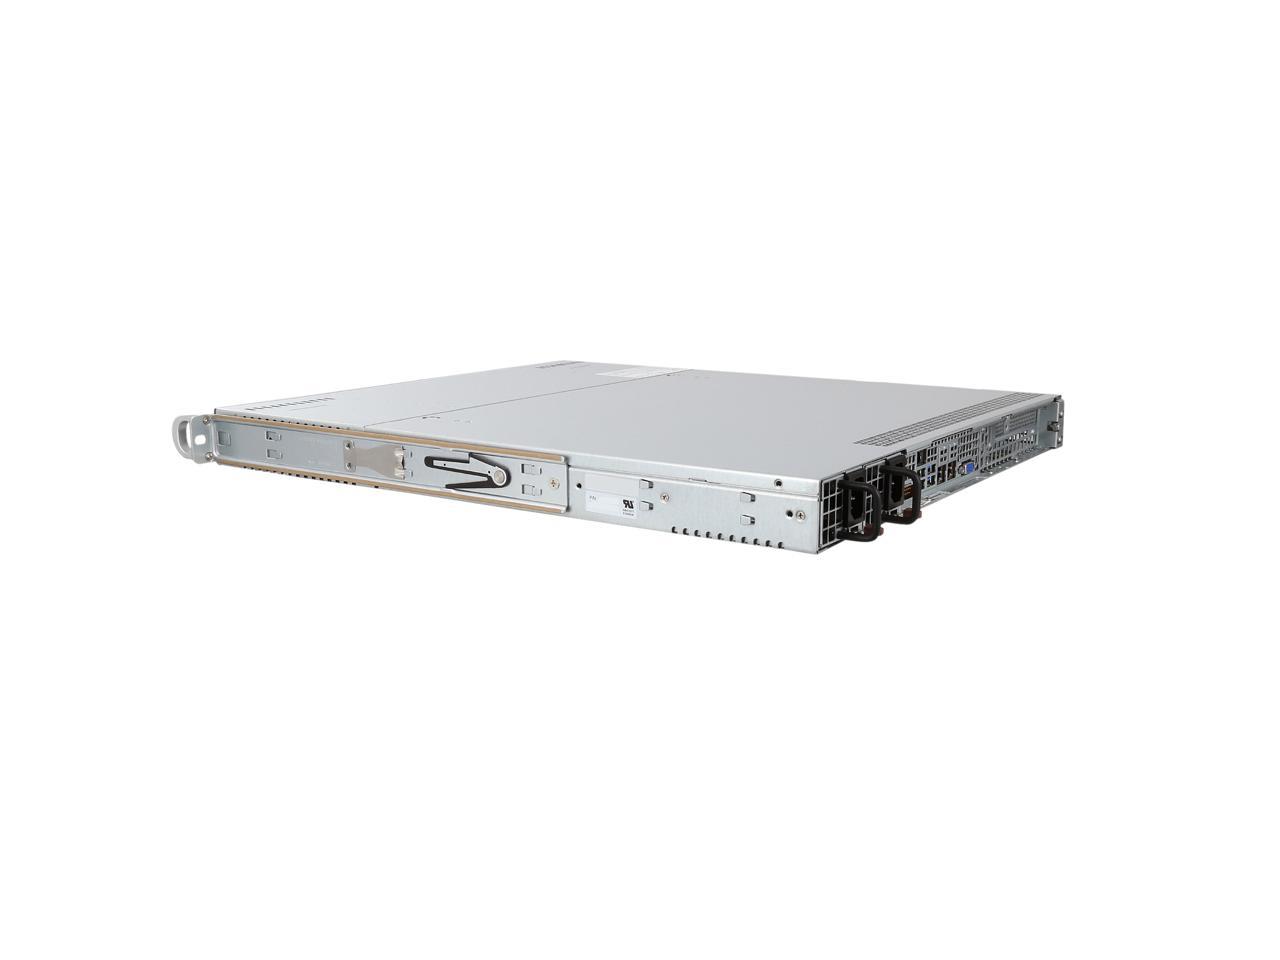 SUPERMICRO SYS-5019S-MR 1U Rackmount Server Barebone - Newegg.com